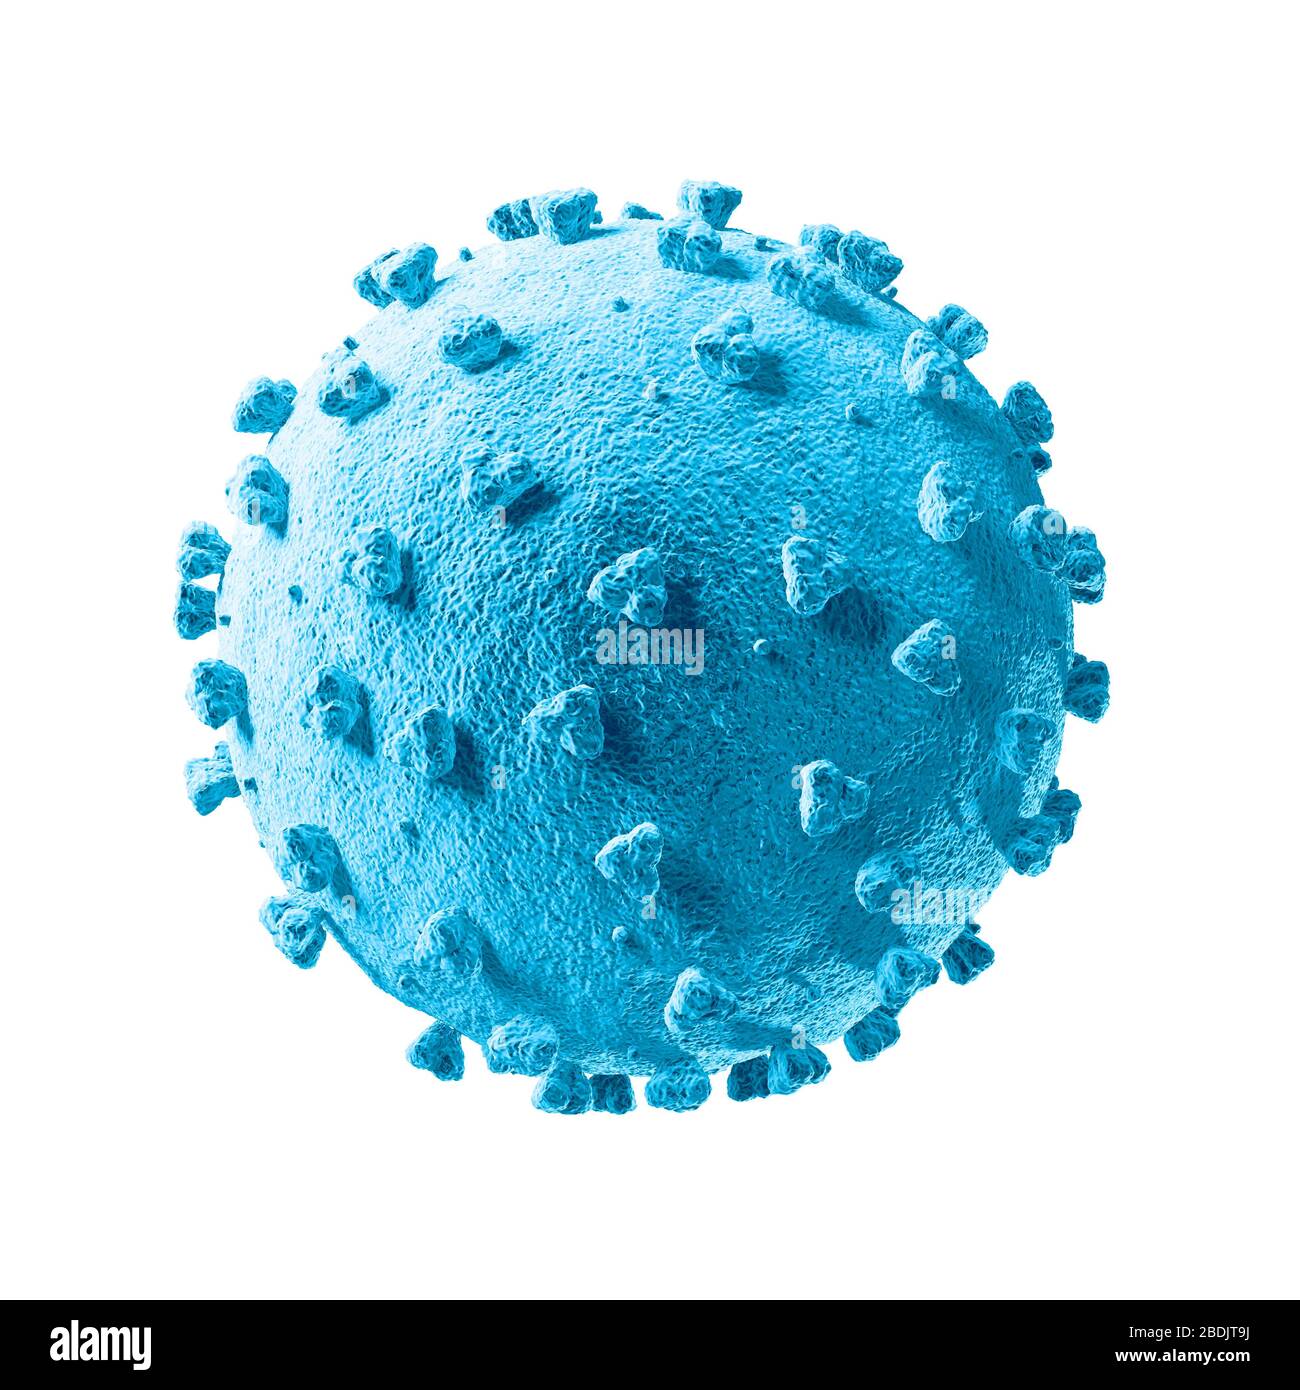 SARS-CoV-2. Pandemic. COVID-19. Coronavirus disease. 2019-2020. 3d illustration. Stock Photo